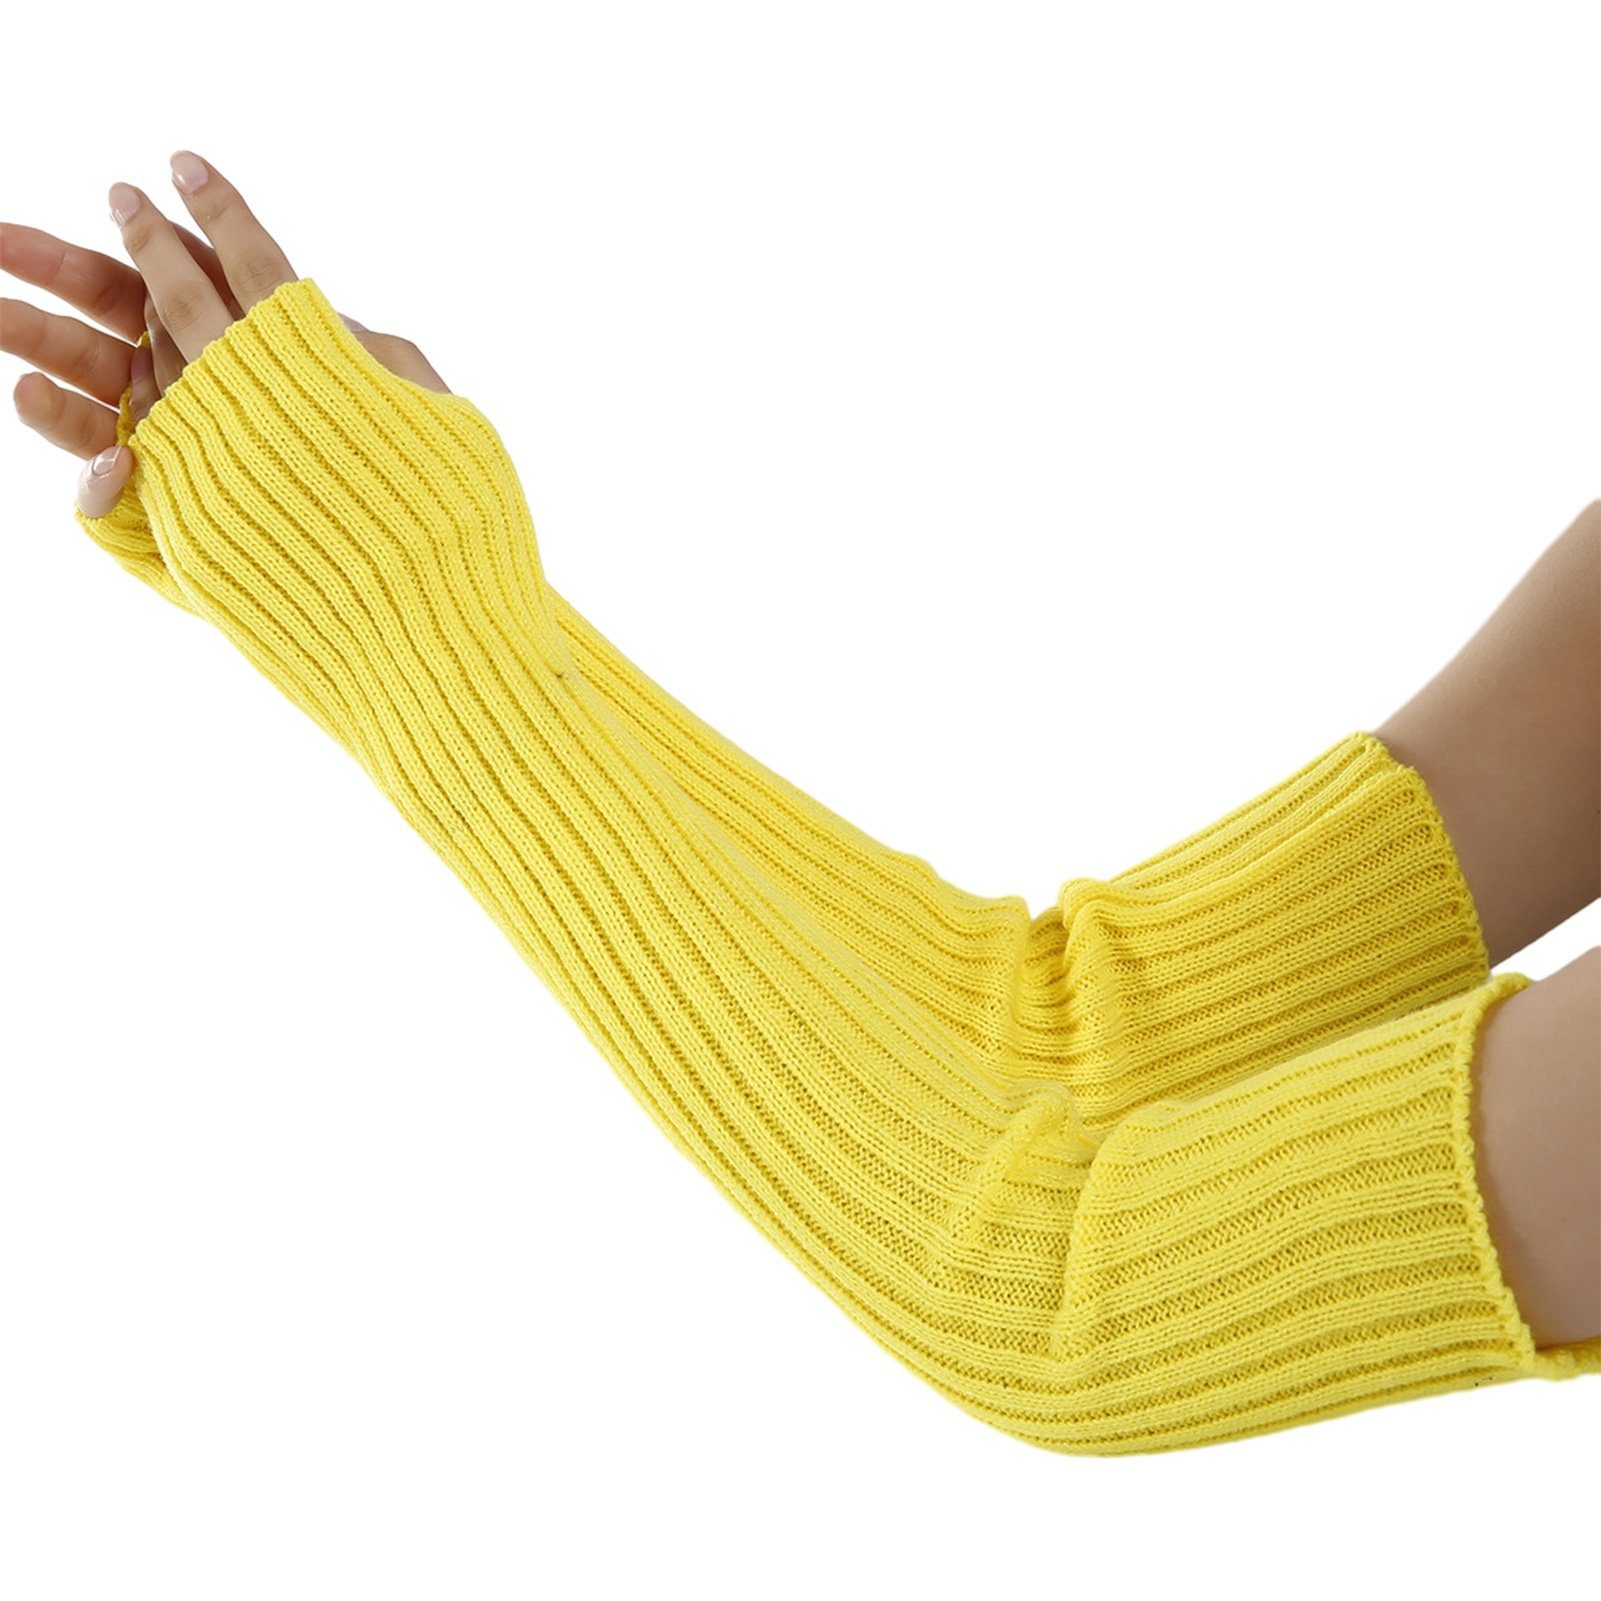 Gelb Strickhandschuhe Bequeme Lange Strickhandschuhe Blusmart Warmhalten, Zum Fingerlose Handschuhe, Winterhandschuhe